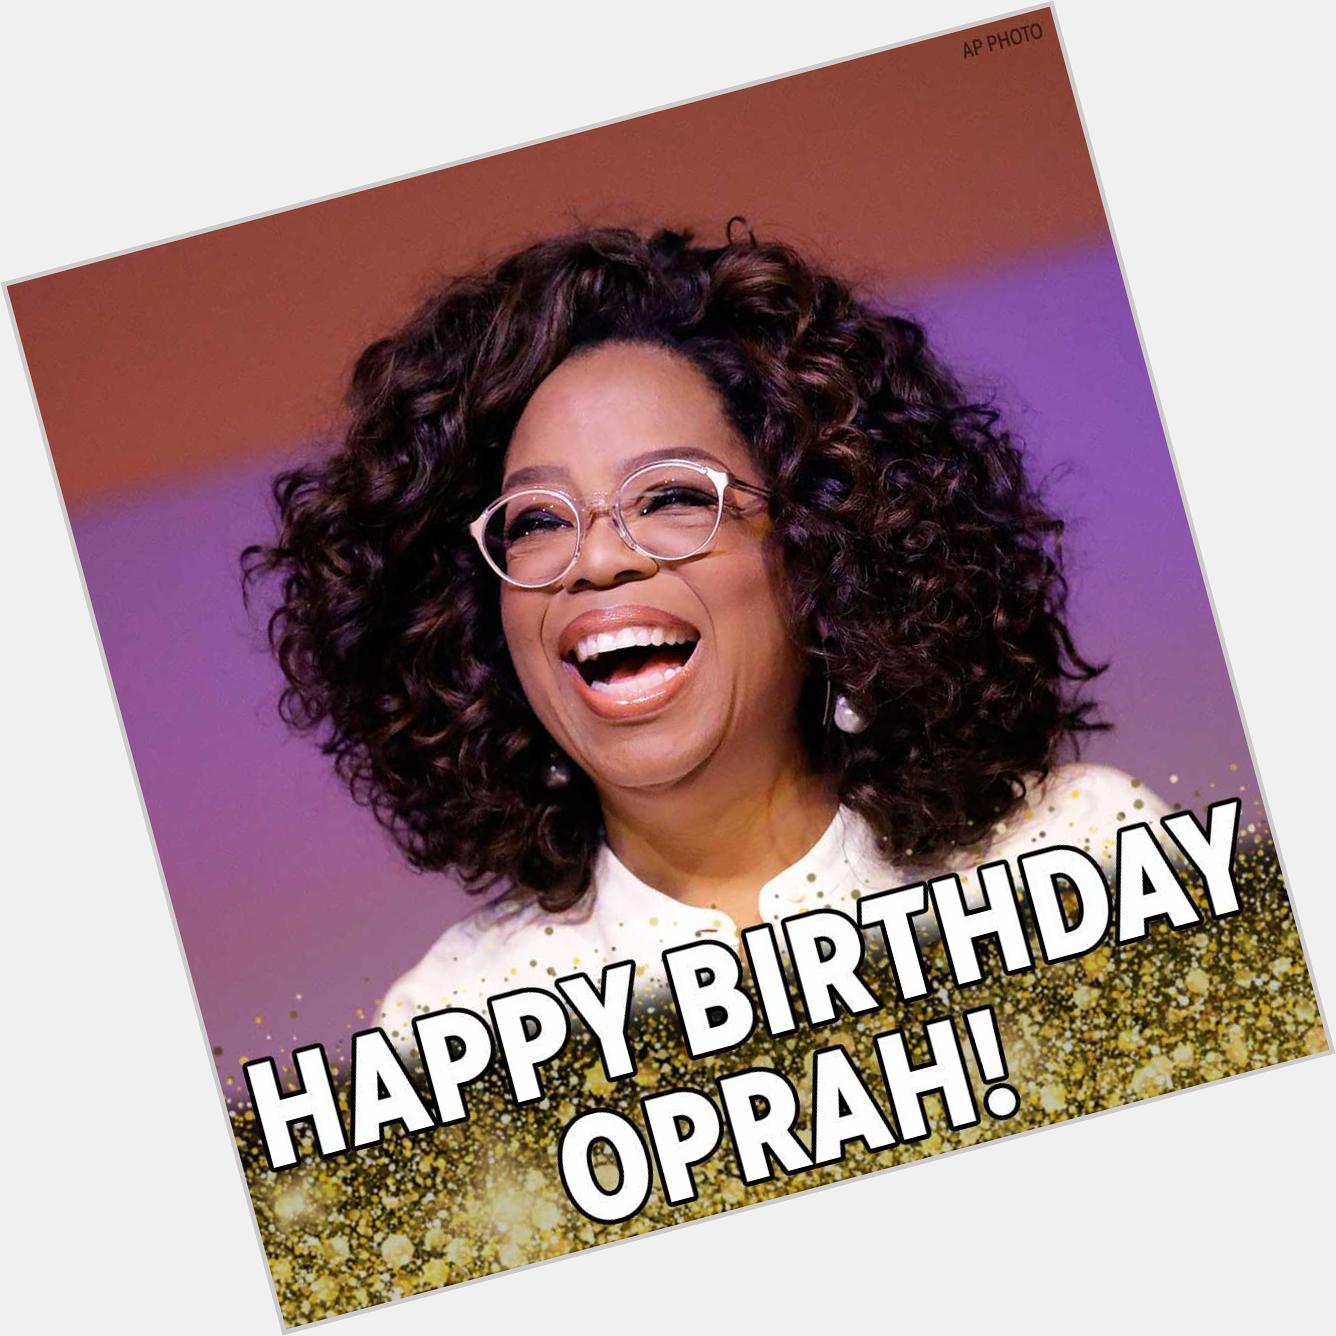 Happy Birthday, Oprah Winfrey! The media mogul and former talk show host turns 65 today. Happy Birthday, 